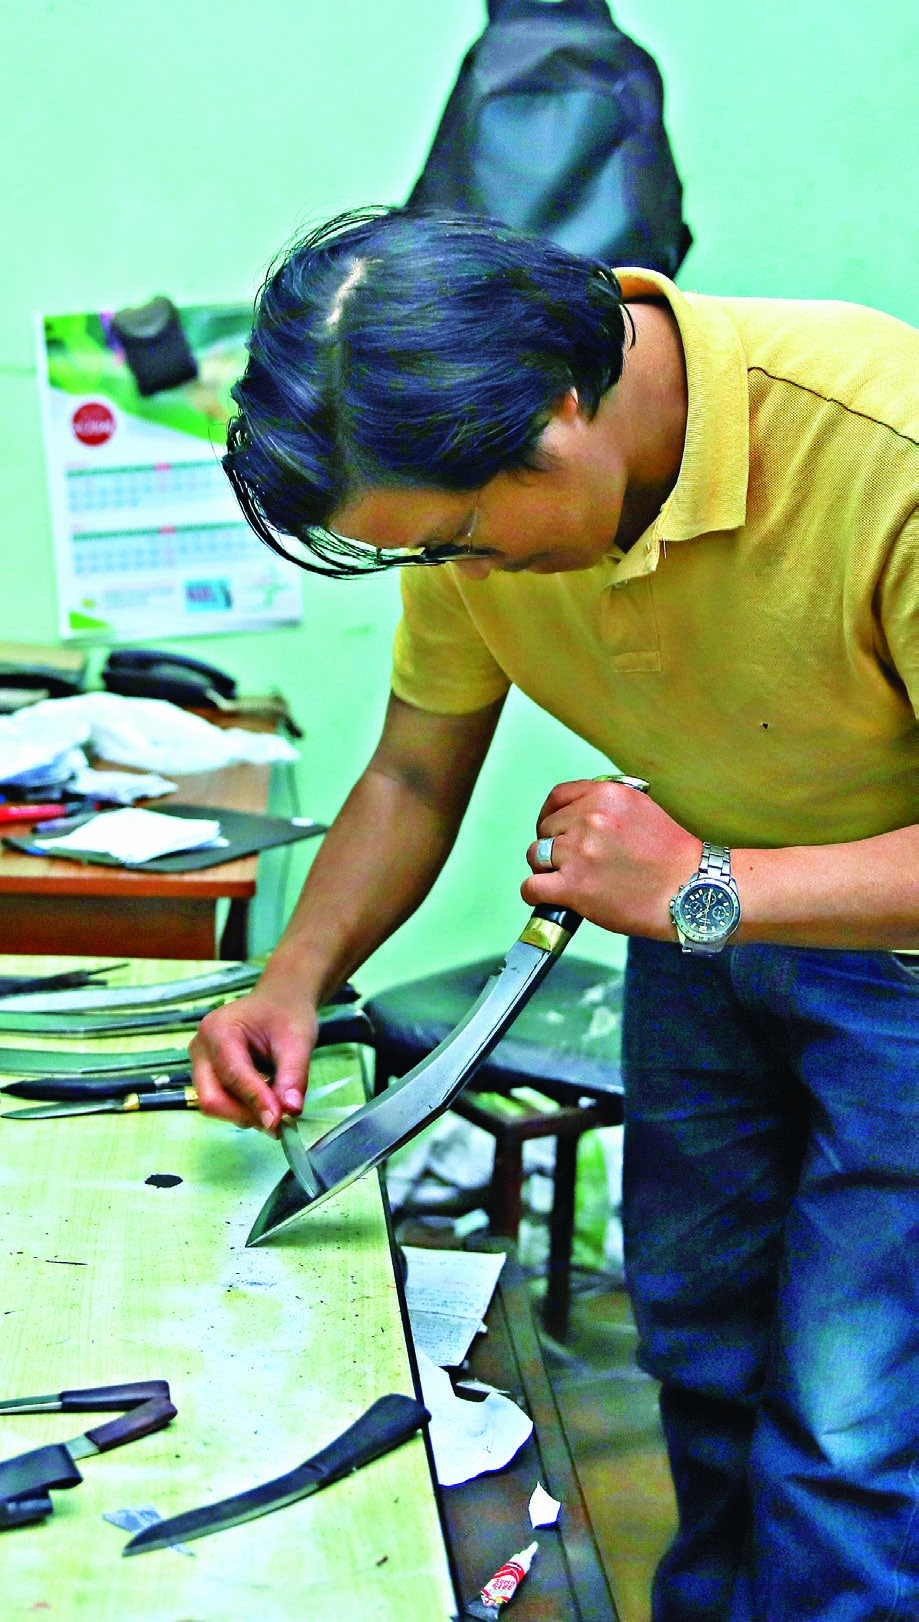 polishing and sharpening khukuri